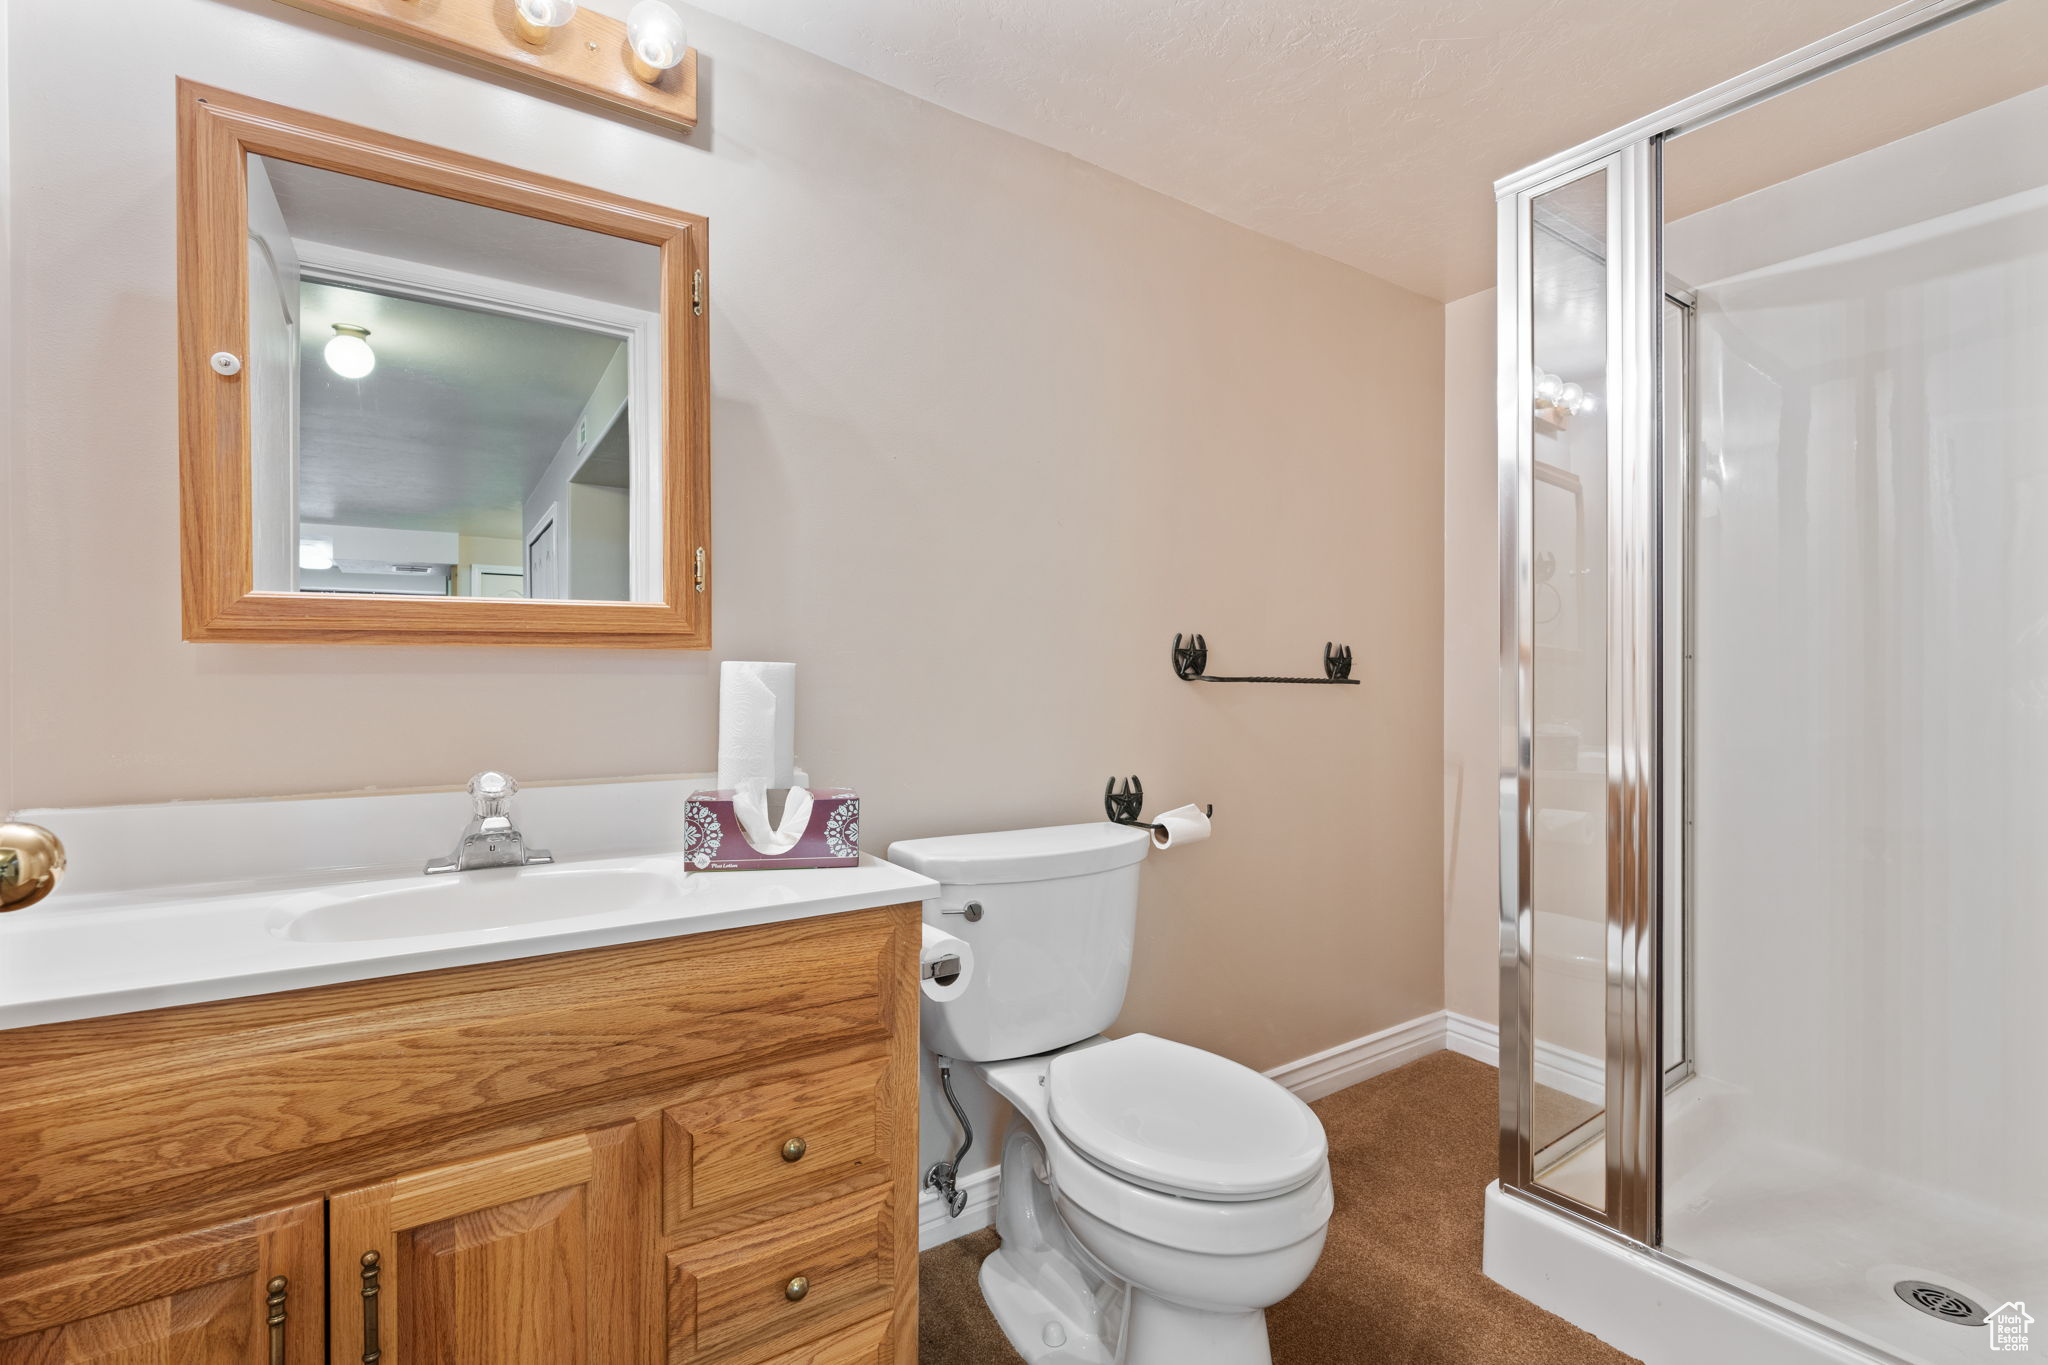 3/4 Bathroom in basement featuring vanity, toilet, and a shower with door